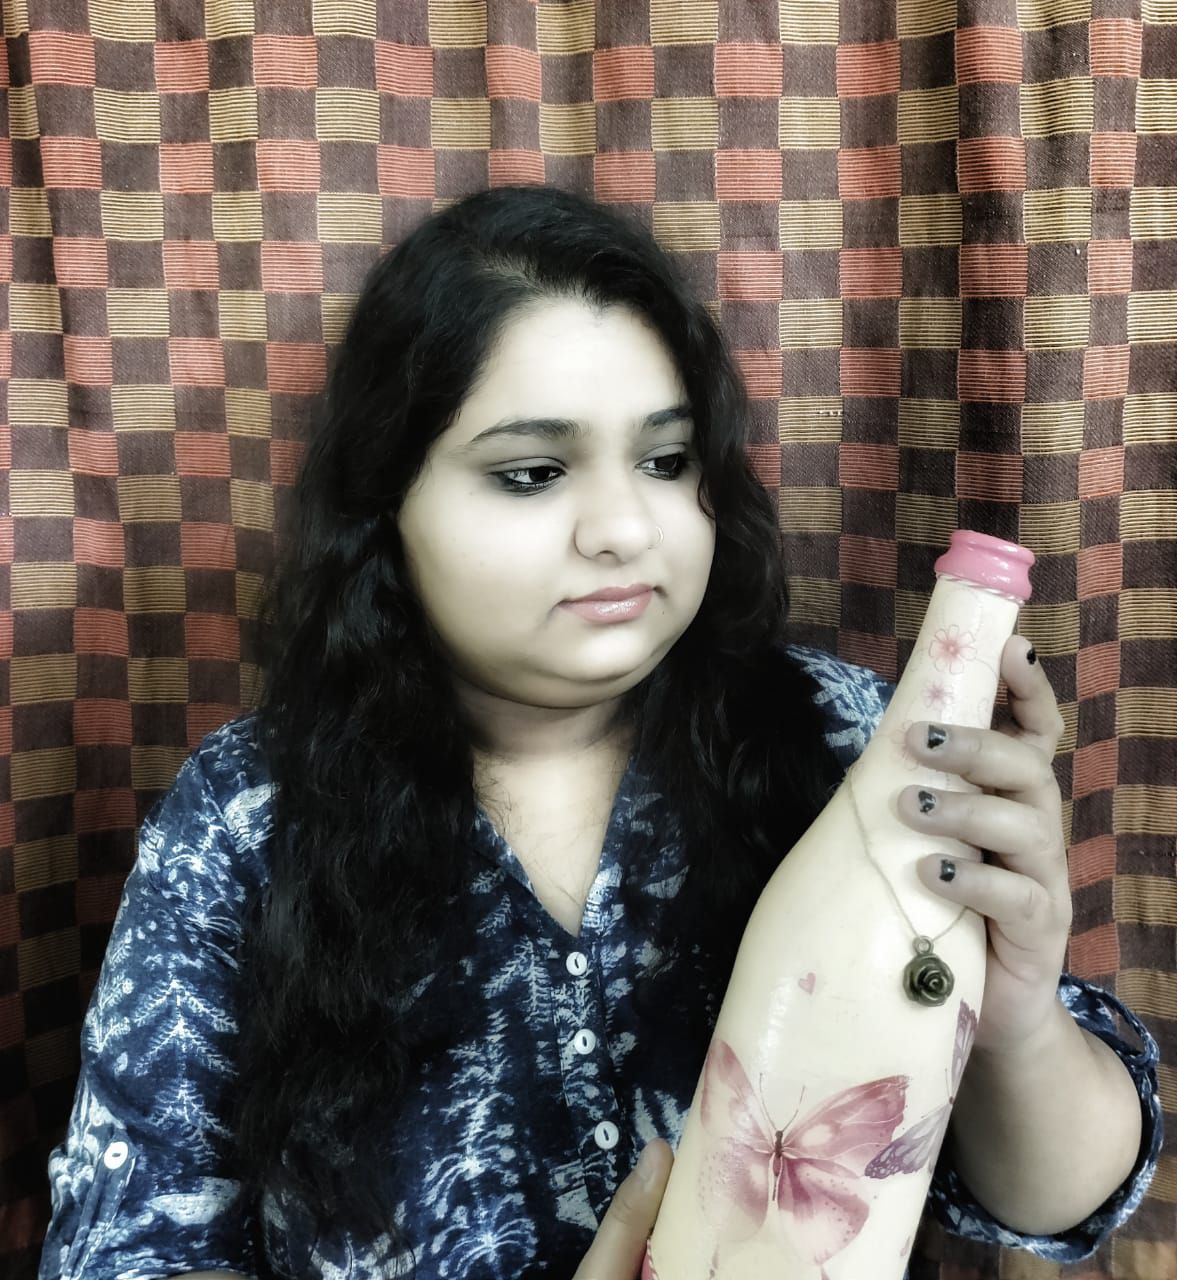 sabhyata looking at bottle